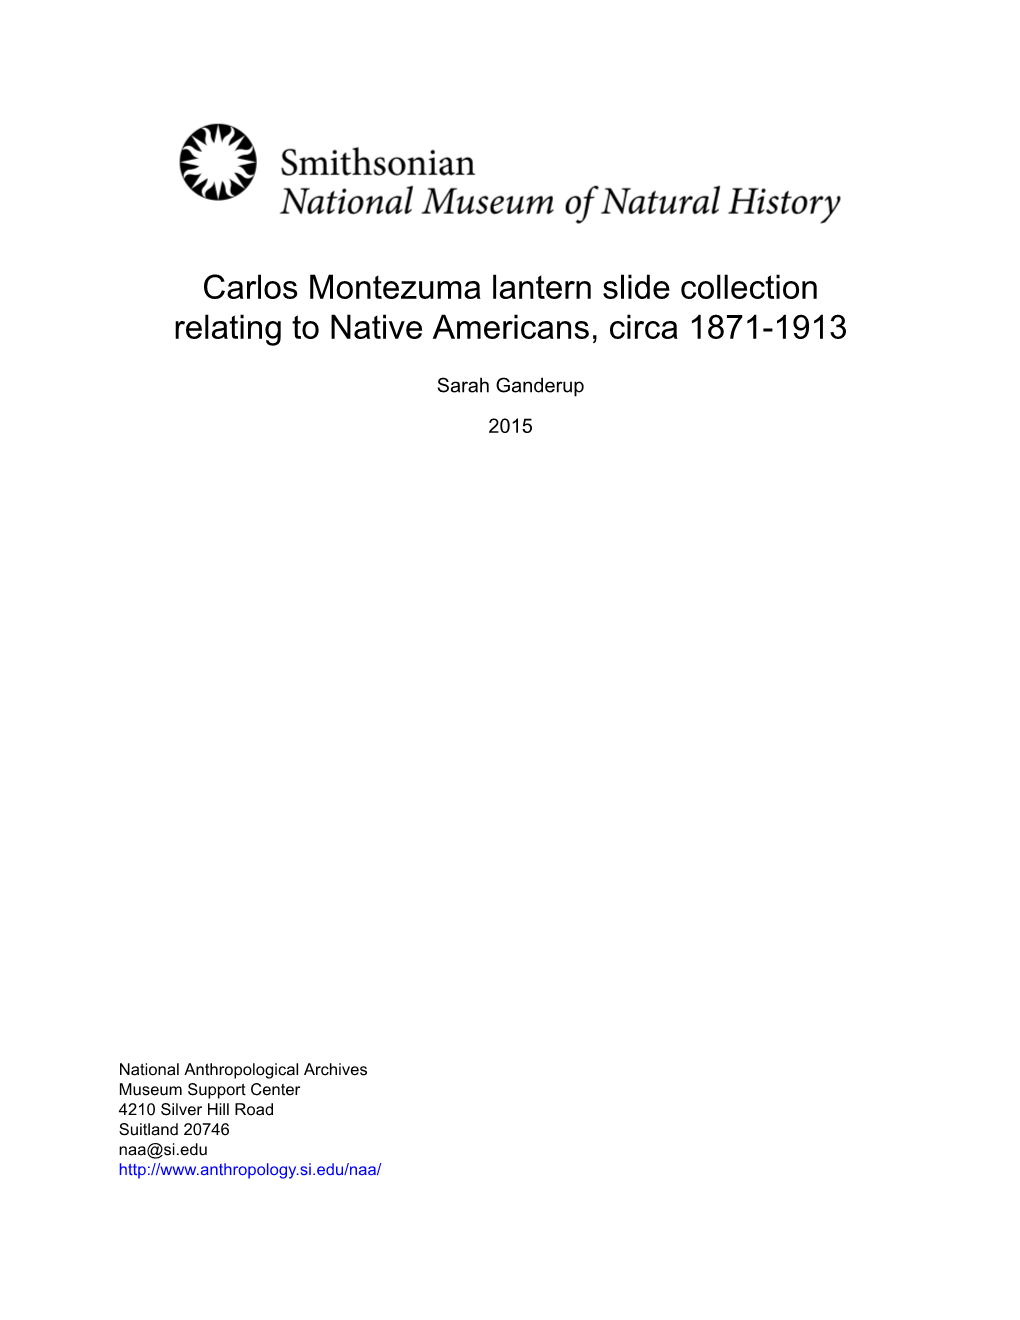 Carlos Montezuma Lantern Slide Collection Relating to Native Americans, Circa 1871-1913